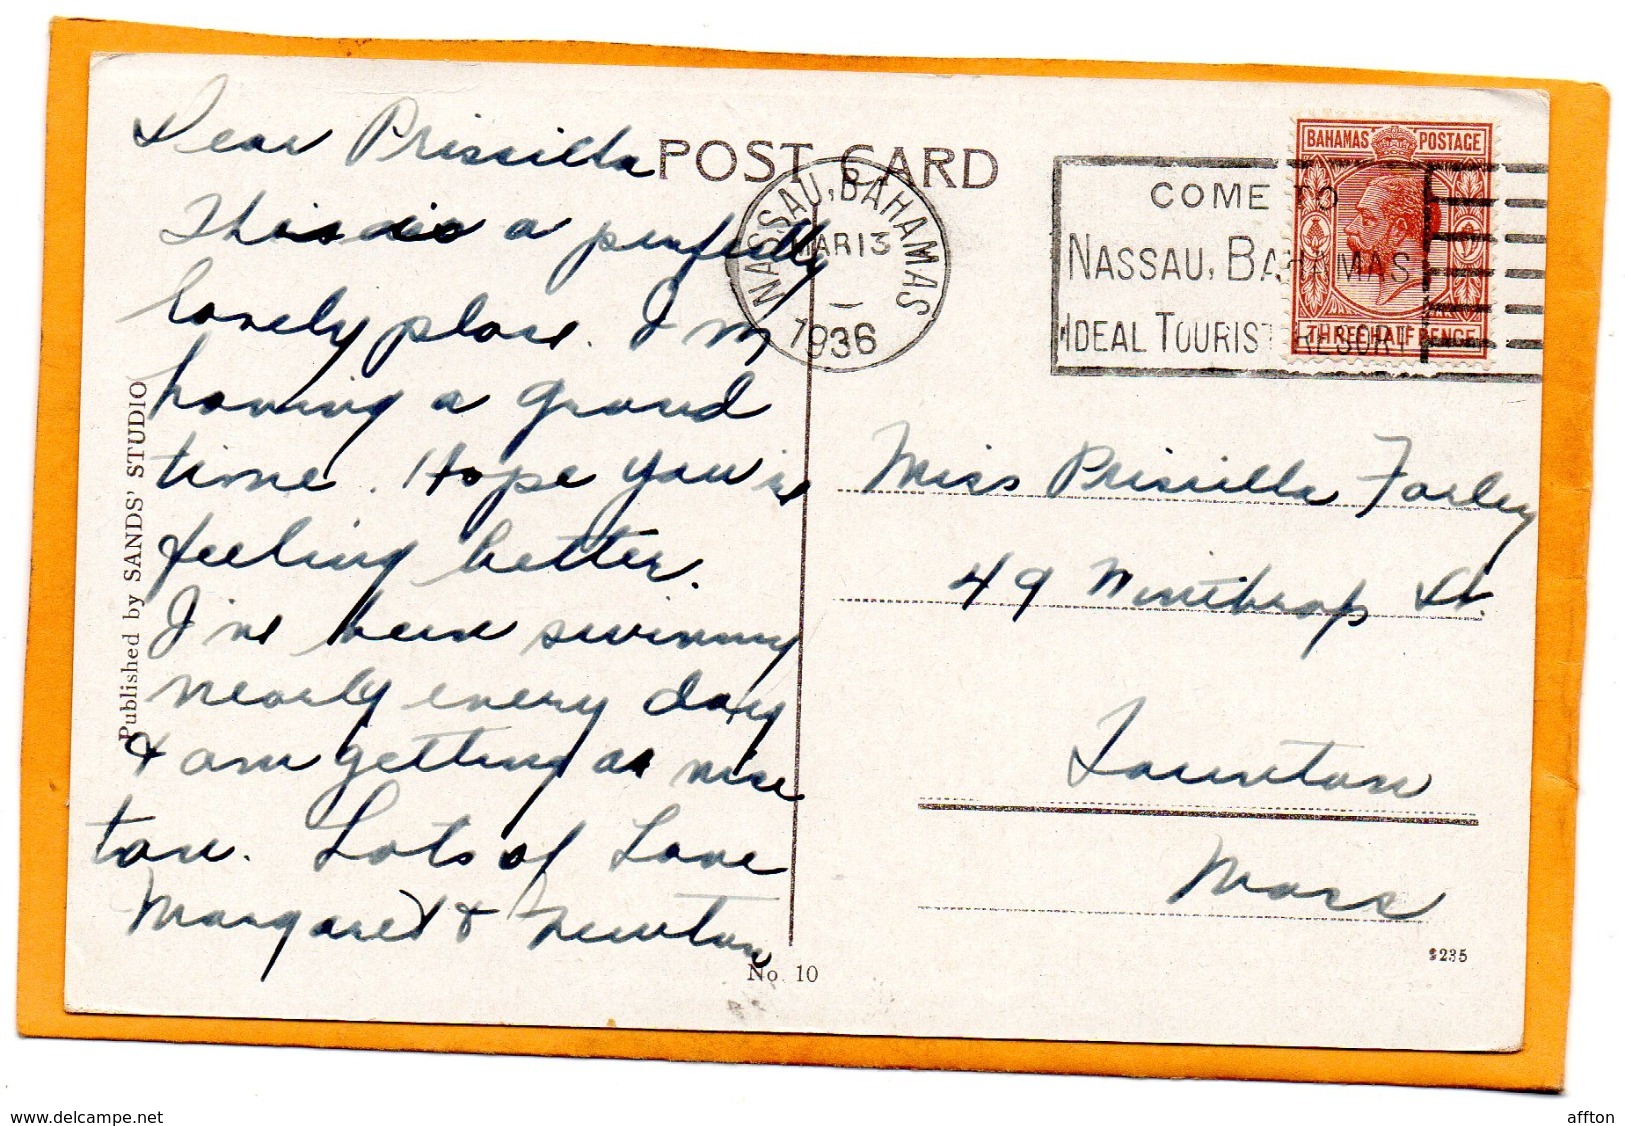 Nassau Bahamas 1938 Postcard Mailed - Bahamas